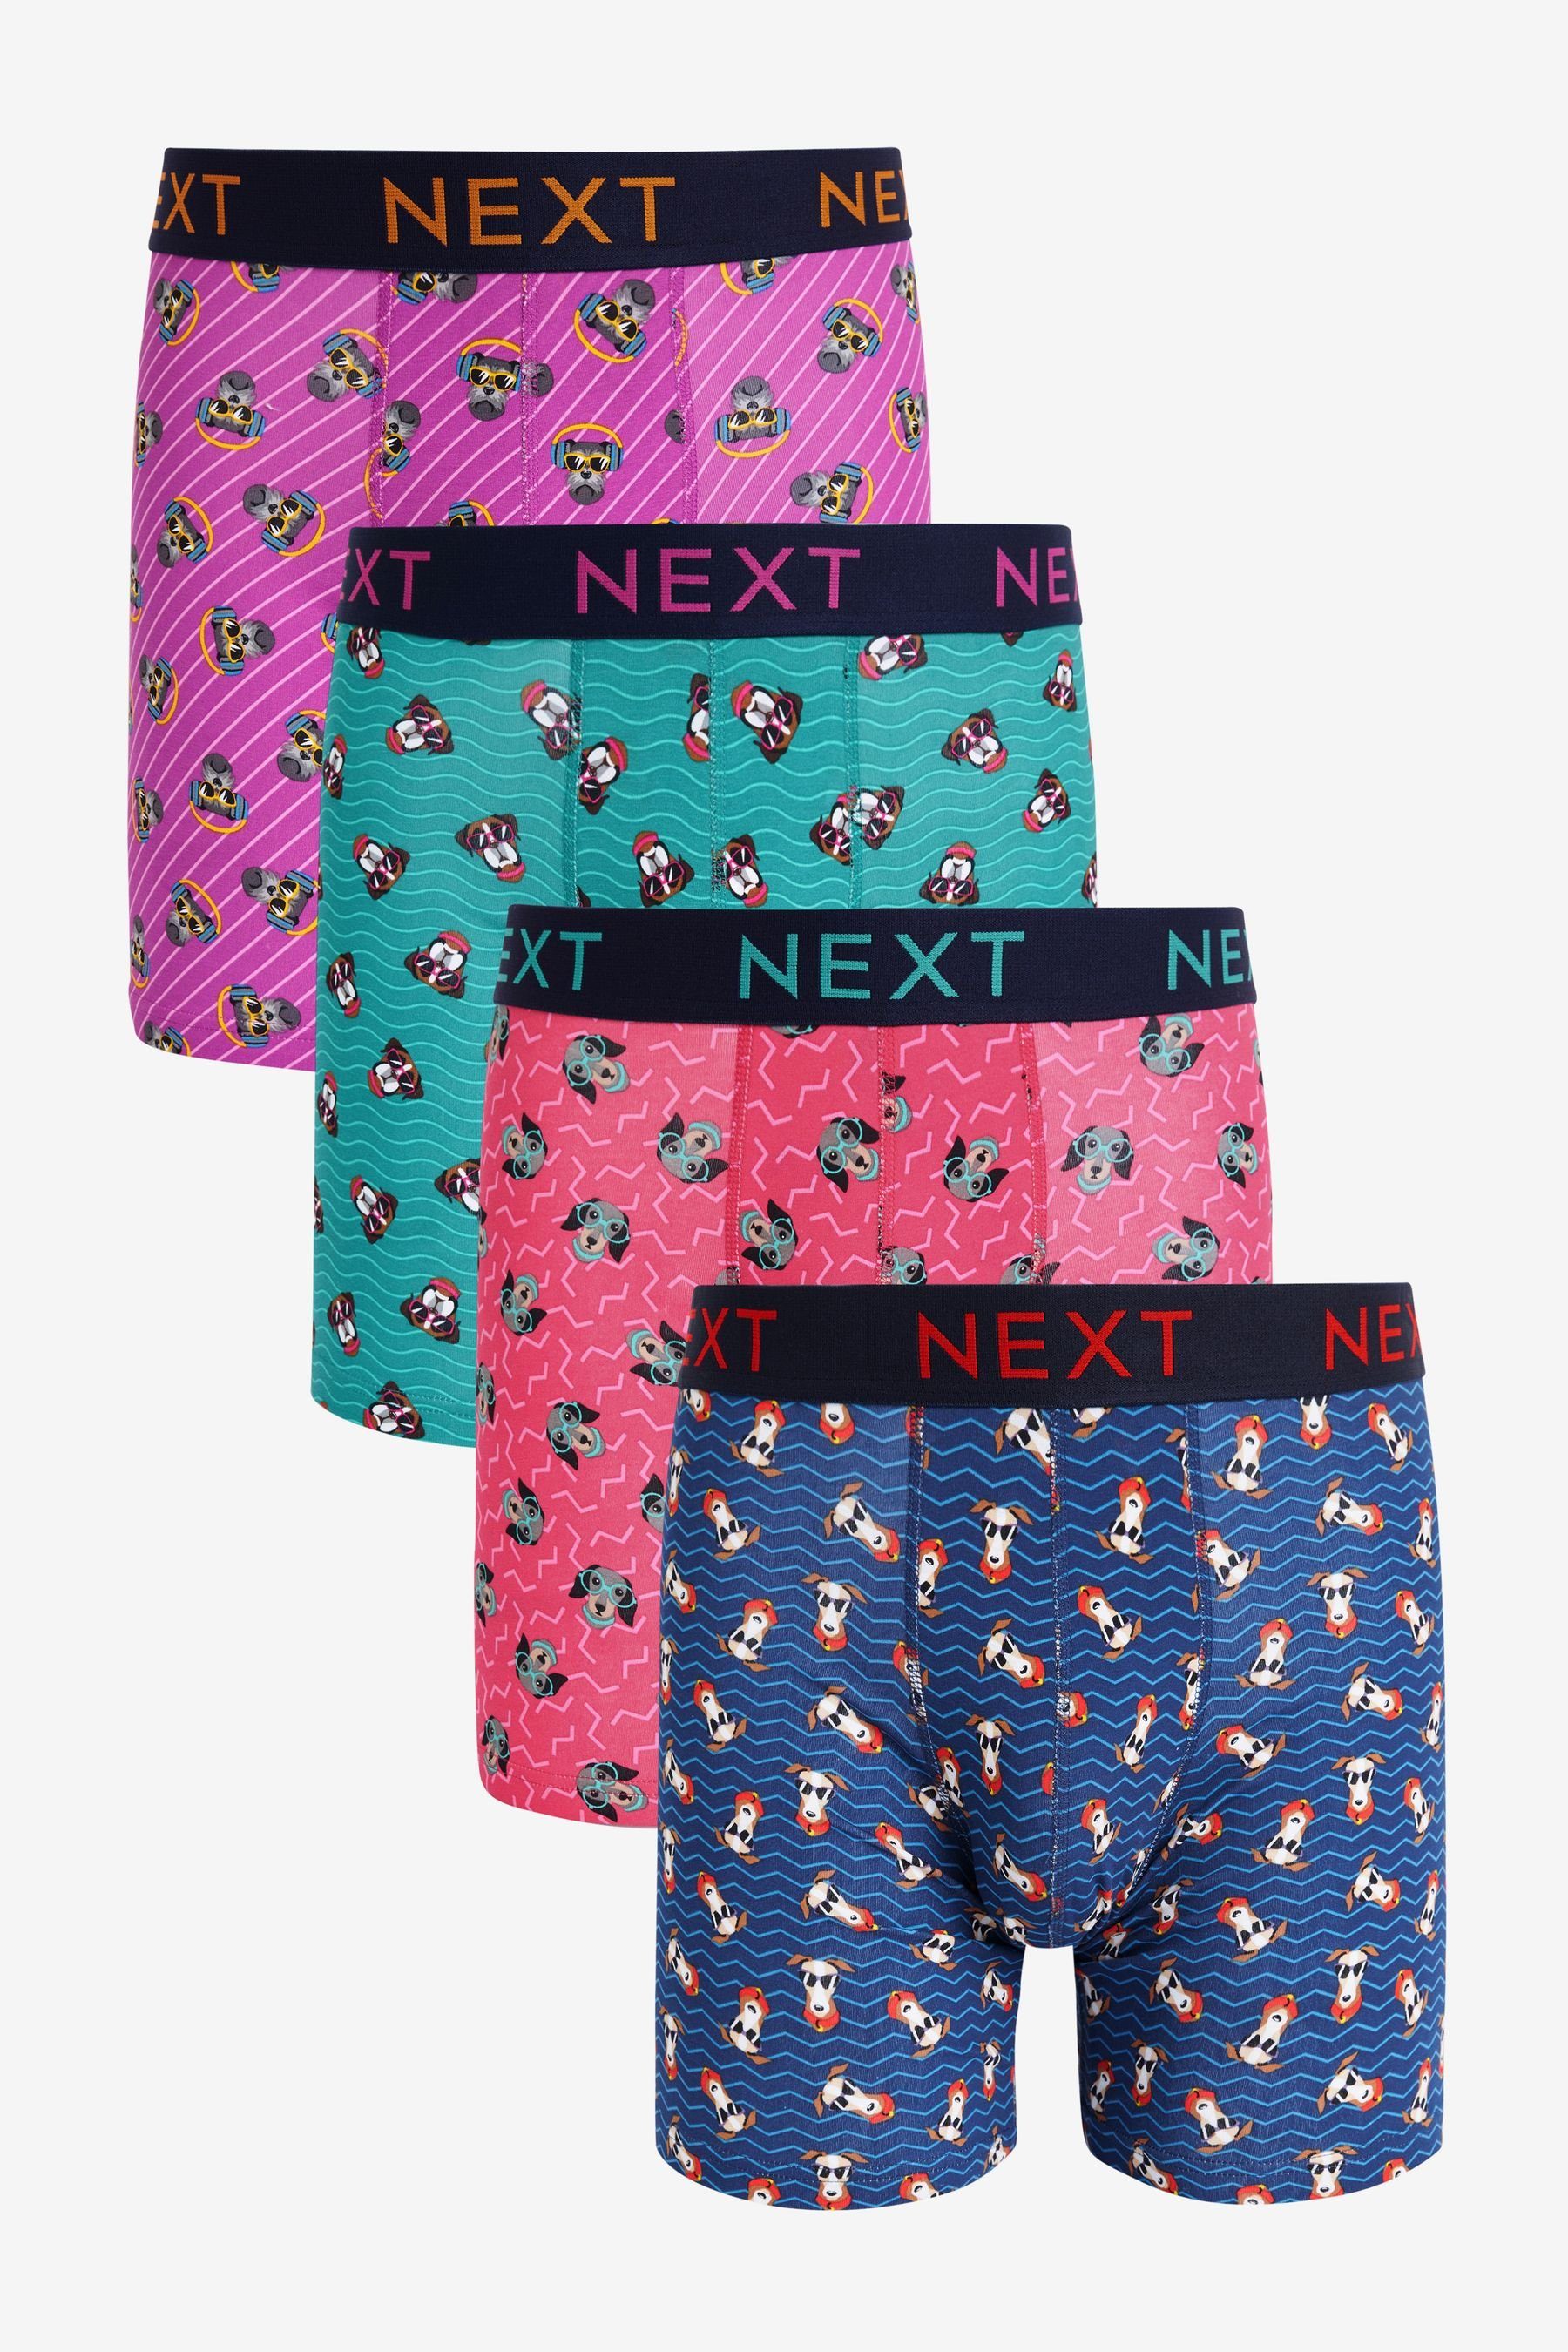 Next 4er-Pack (4-St) Blue/Pink Unterhose, Hipster